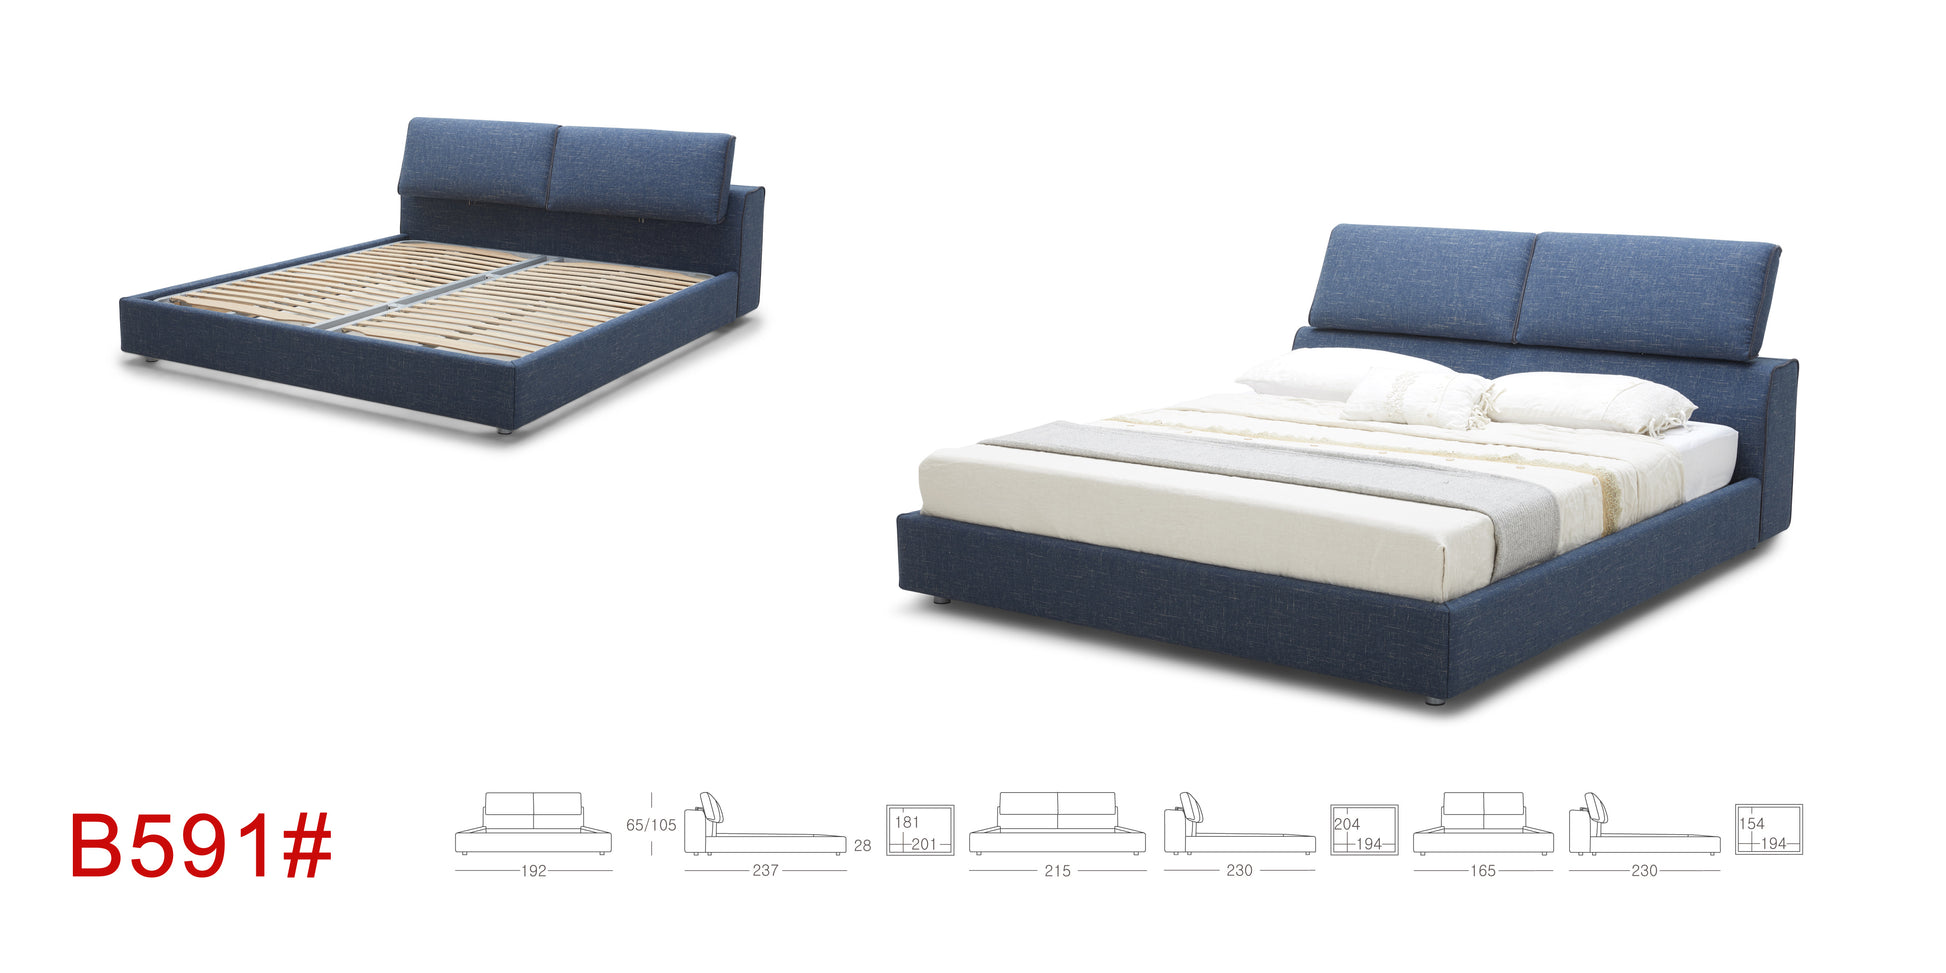 EMF Platform Bed KTOUCH B591 King size by - Eurohaus Modern Furniture LLC